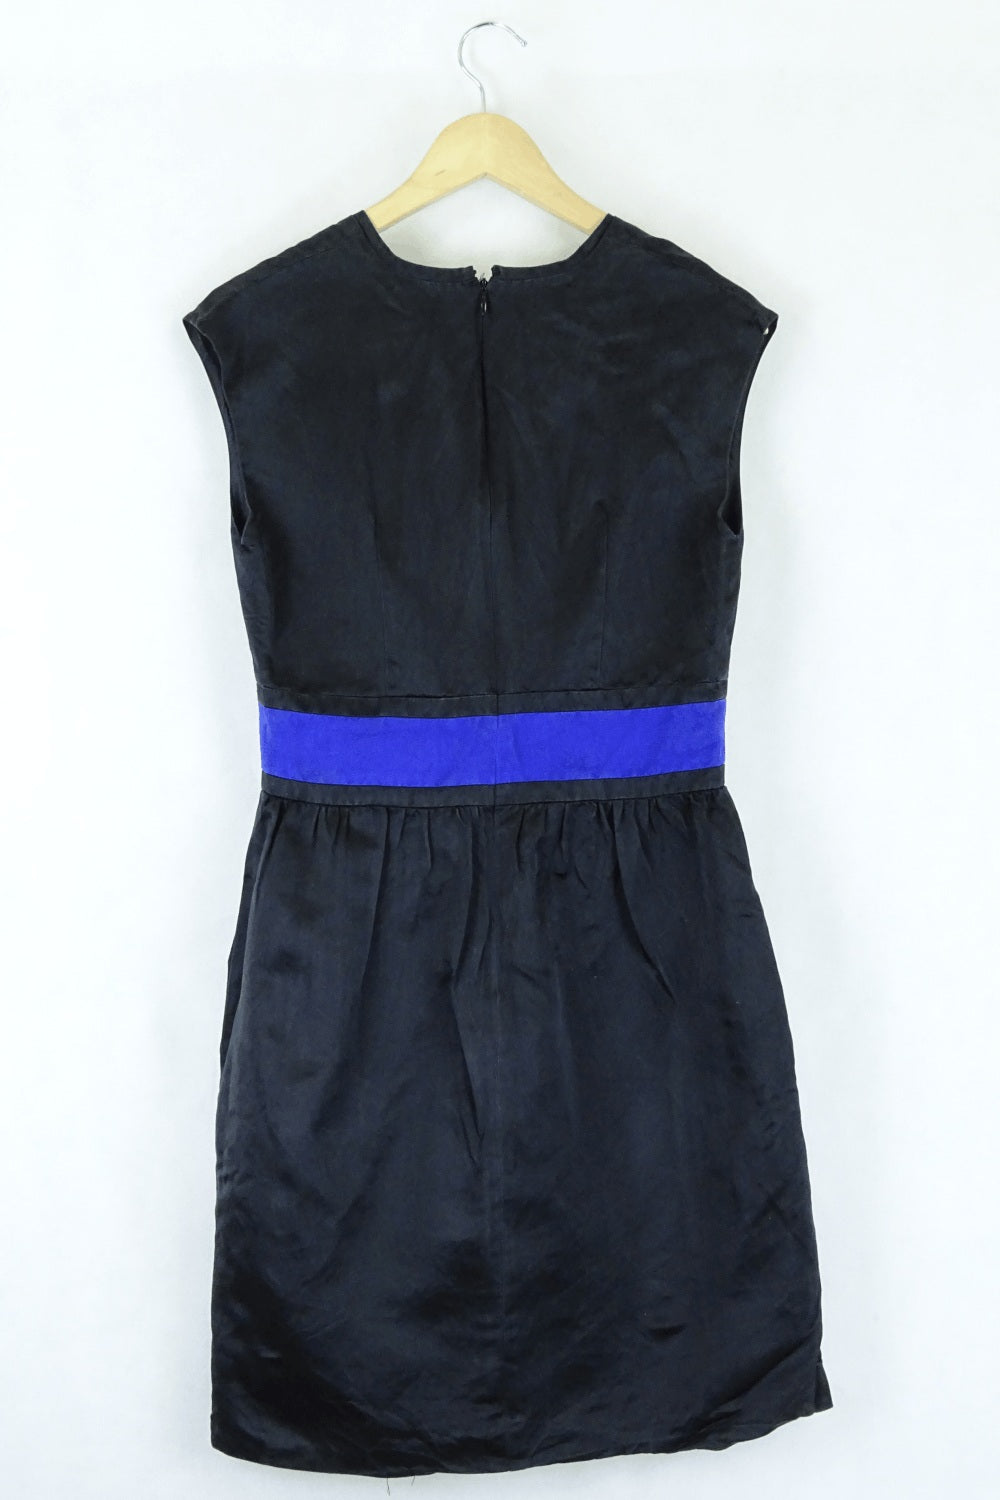 Cynthia Rowley Black And Blue Dress 6